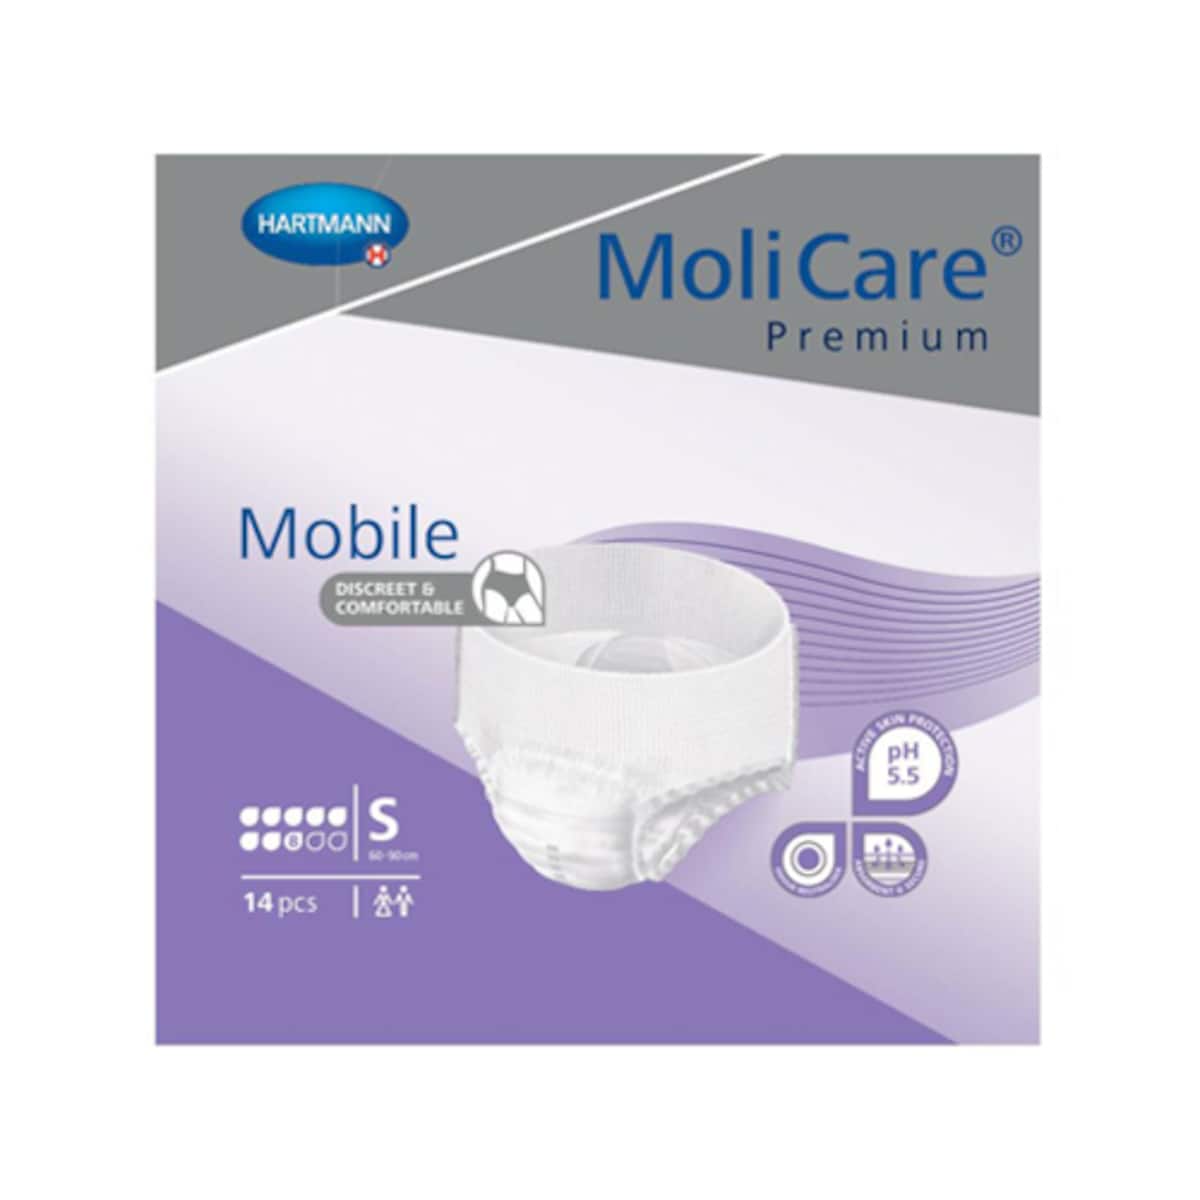 MoliCare Premium Mobile 8 Drop Small 14 Pack